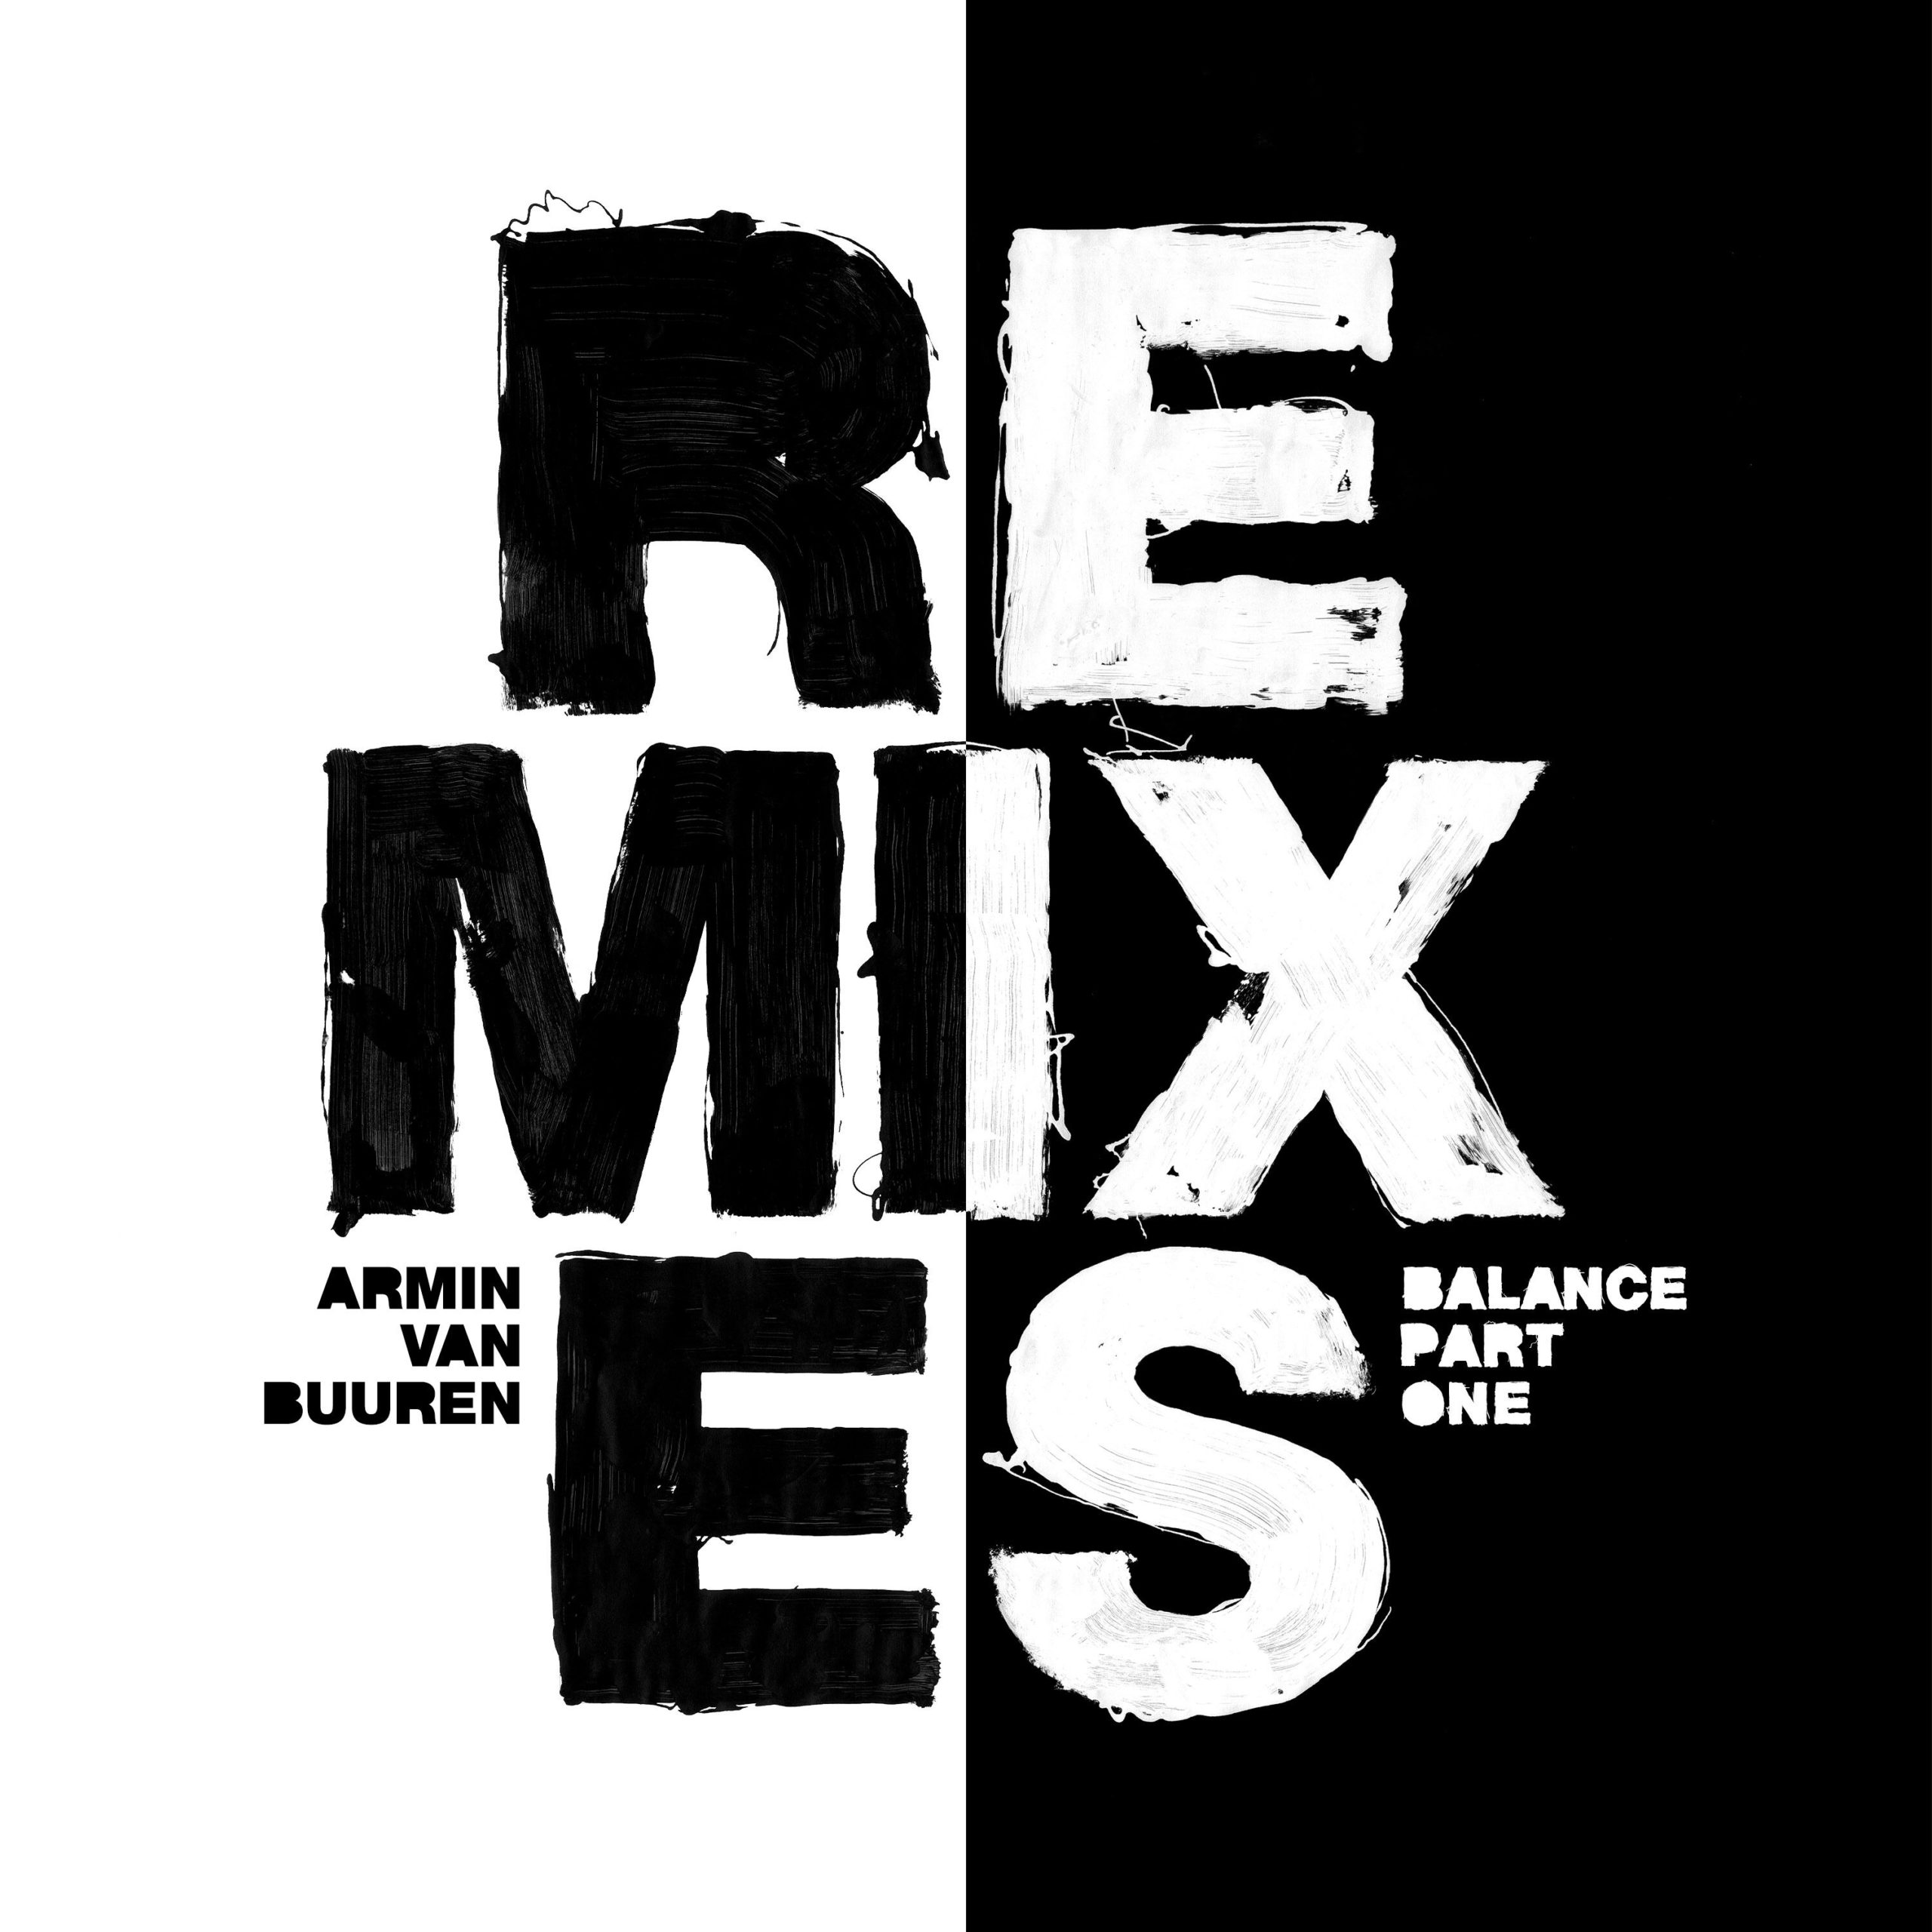 Armin van Buuren presents Balance (Remixes part 1) on Armada Music